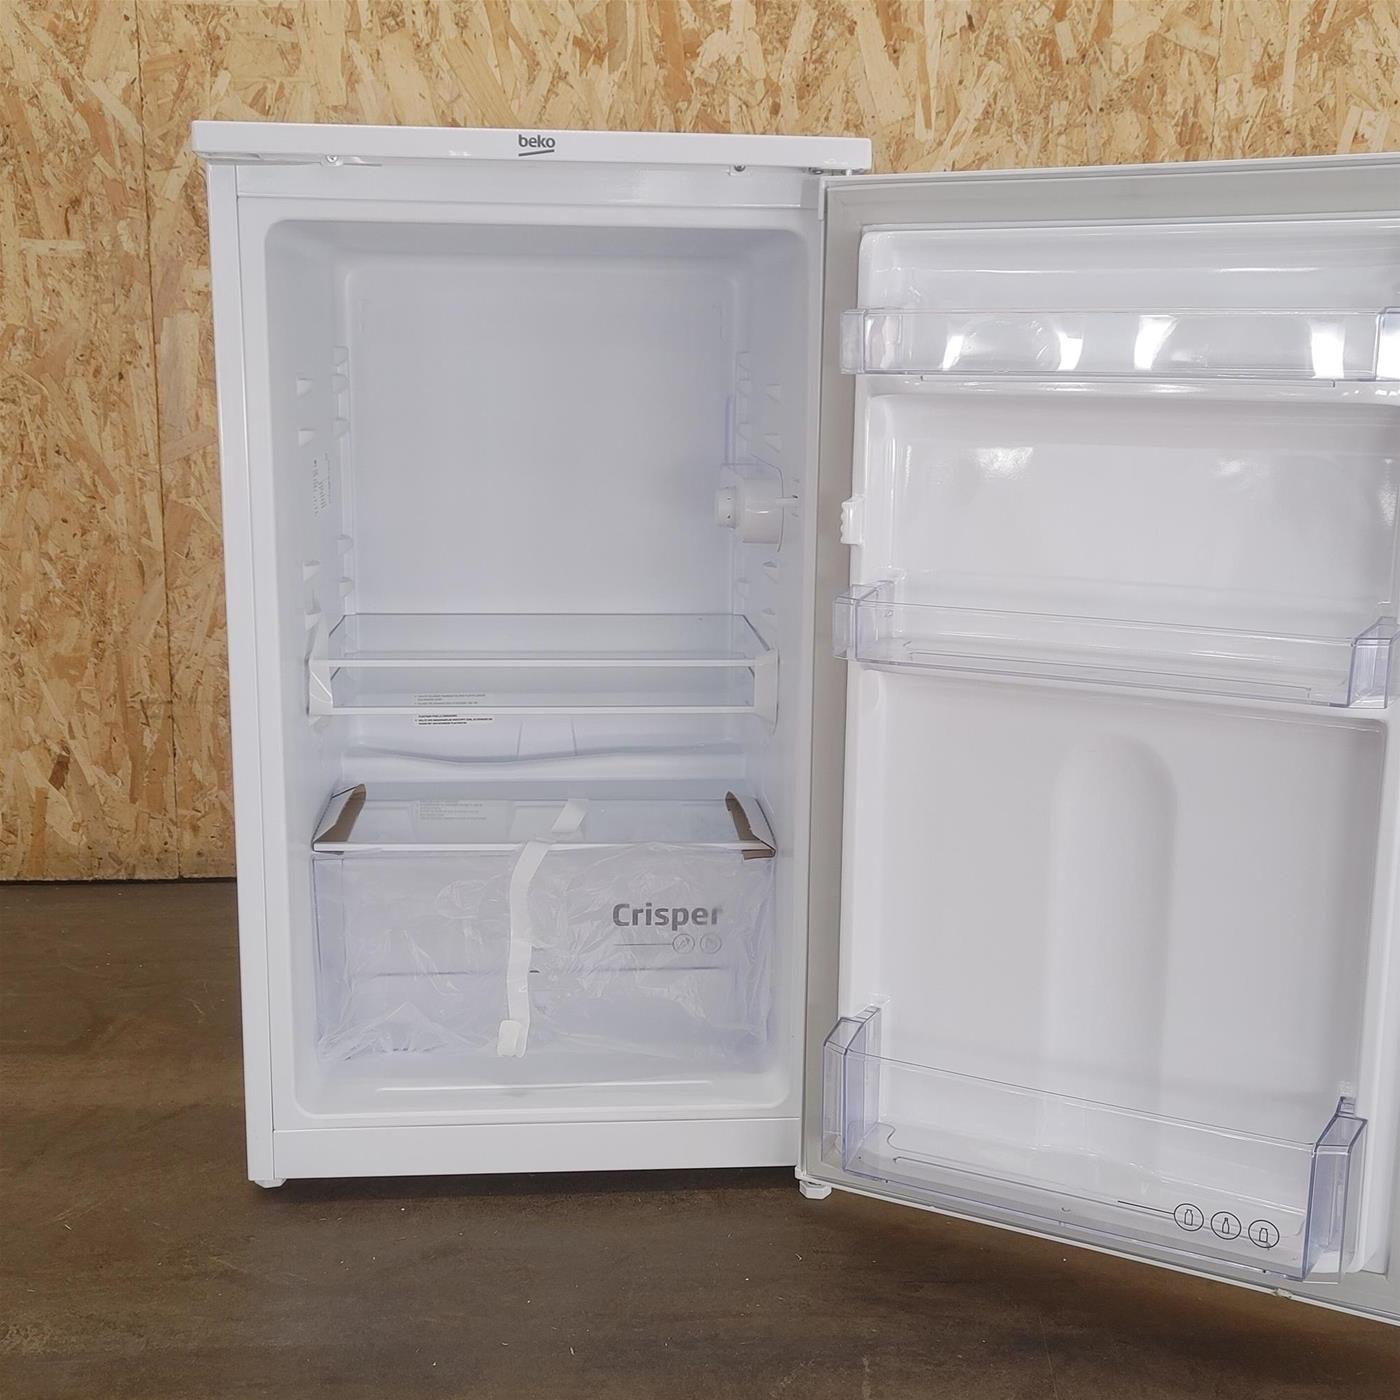 Beko TS190040N frigorifero sottobanco 88 LE bianco